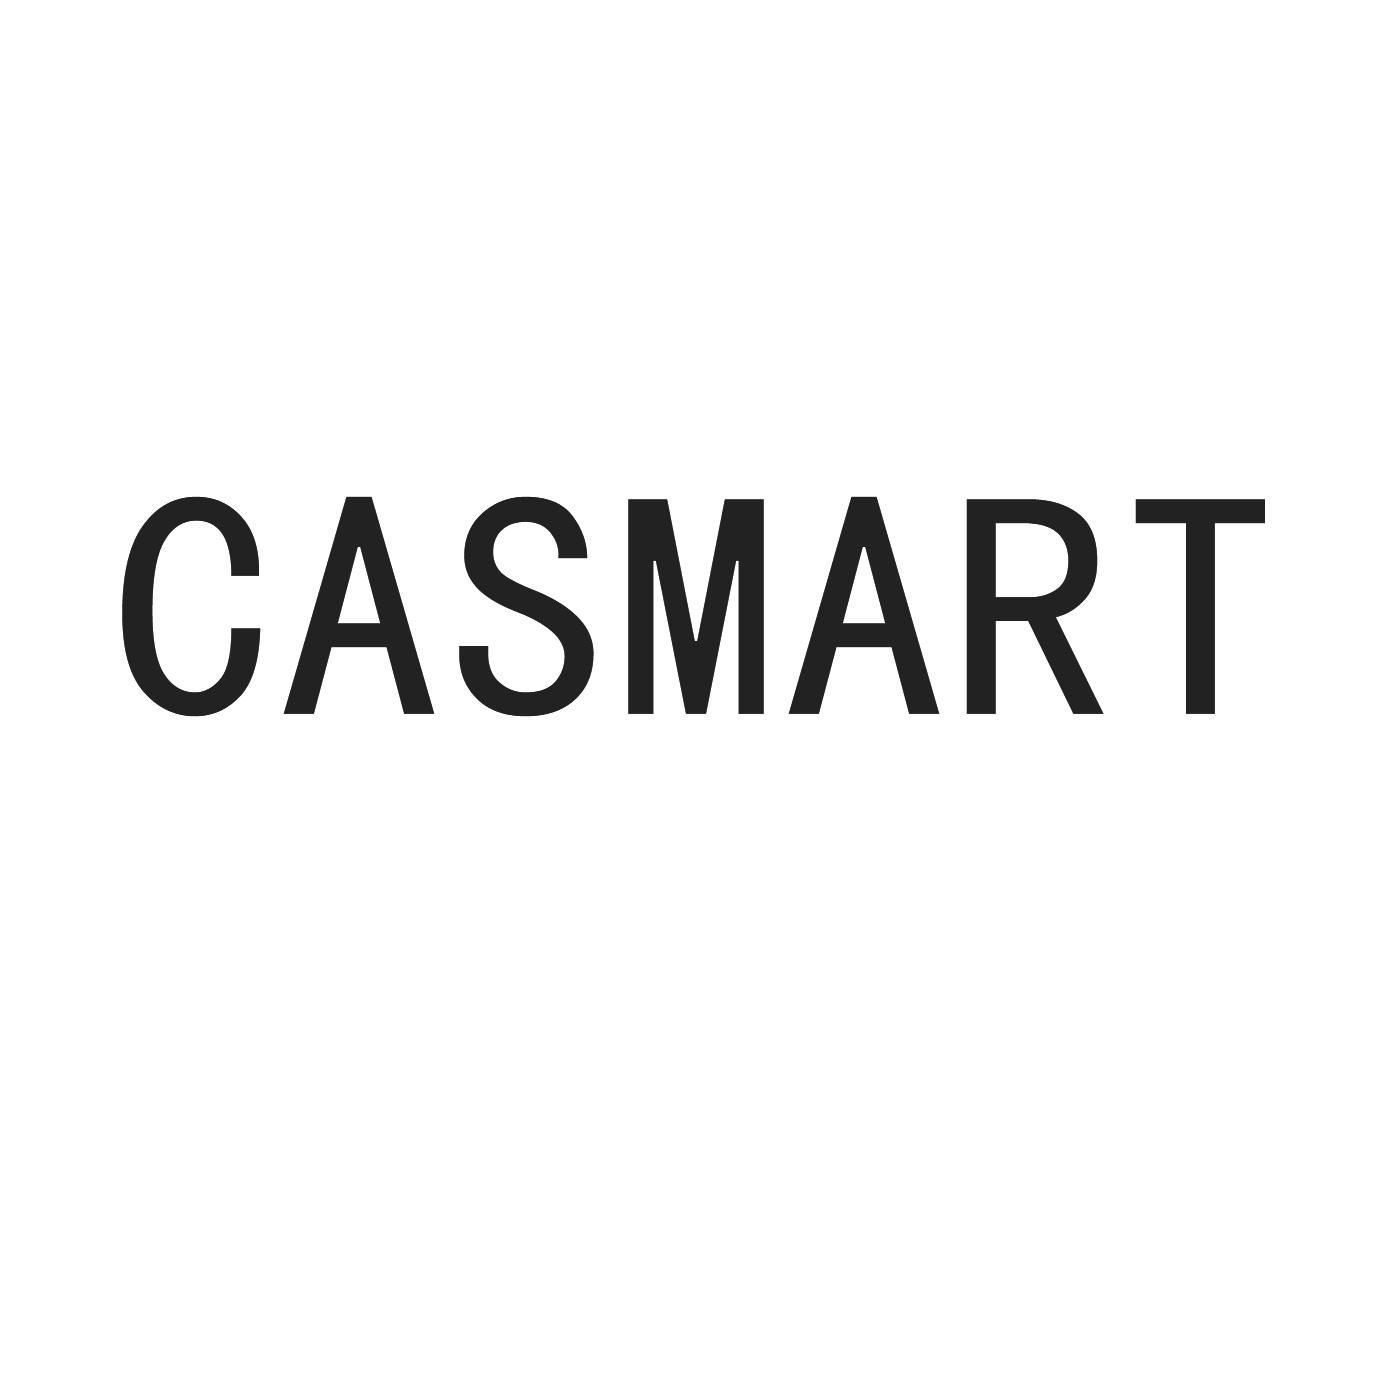 CASMART注册|进度|注册成功率